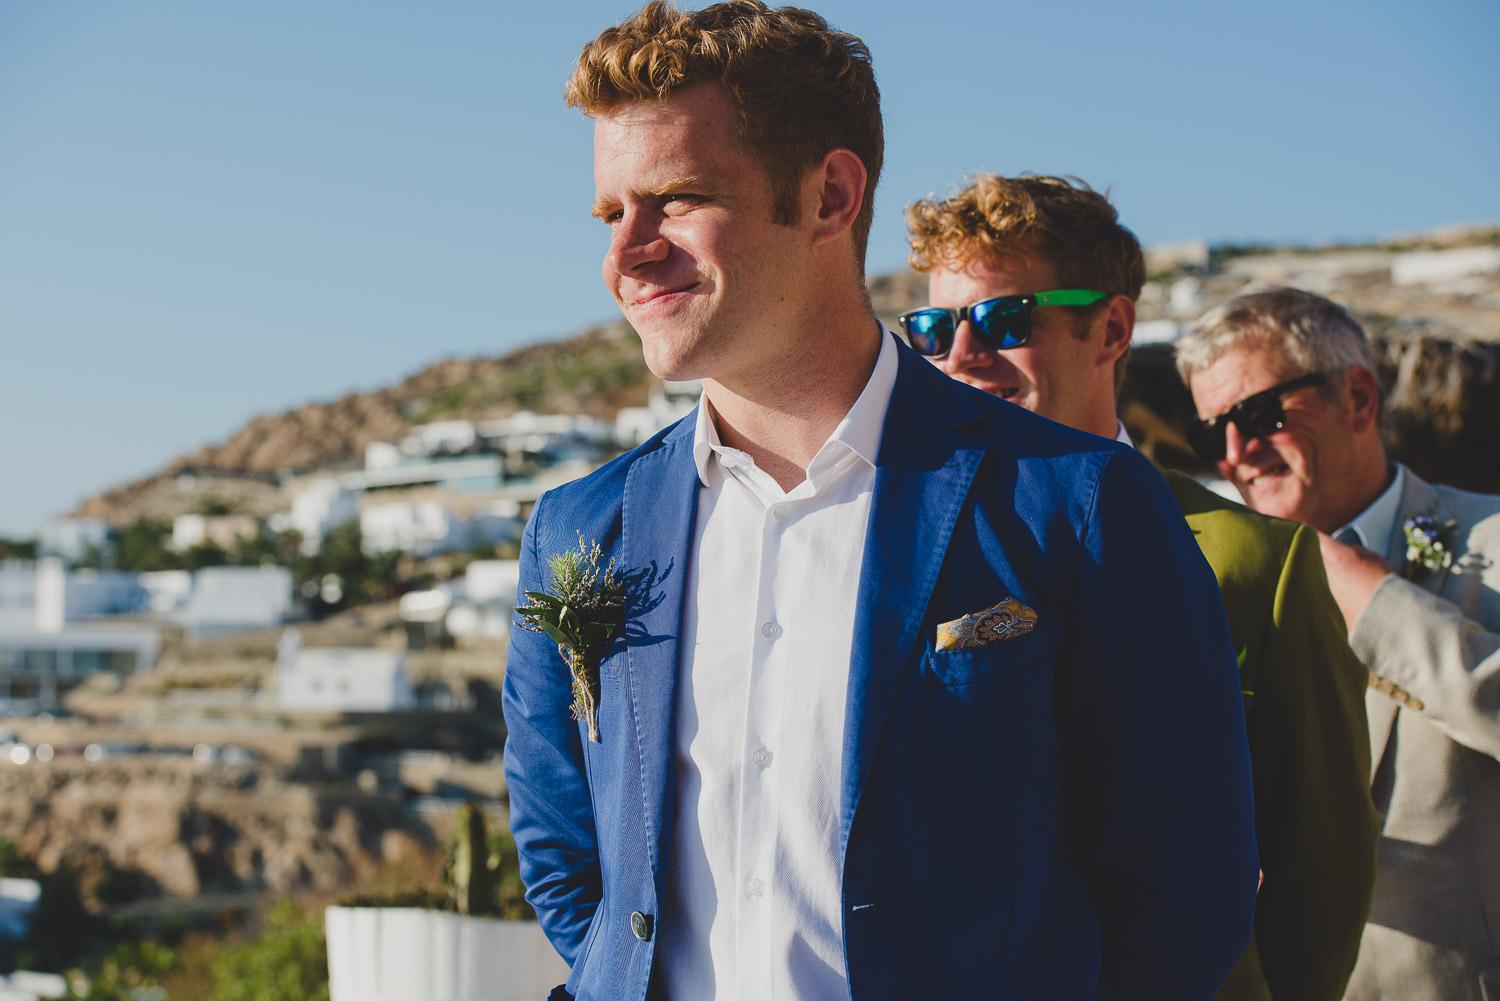 Wedding photographer Mykonos: smiling groom waiting at the church during Mykonos wedding.